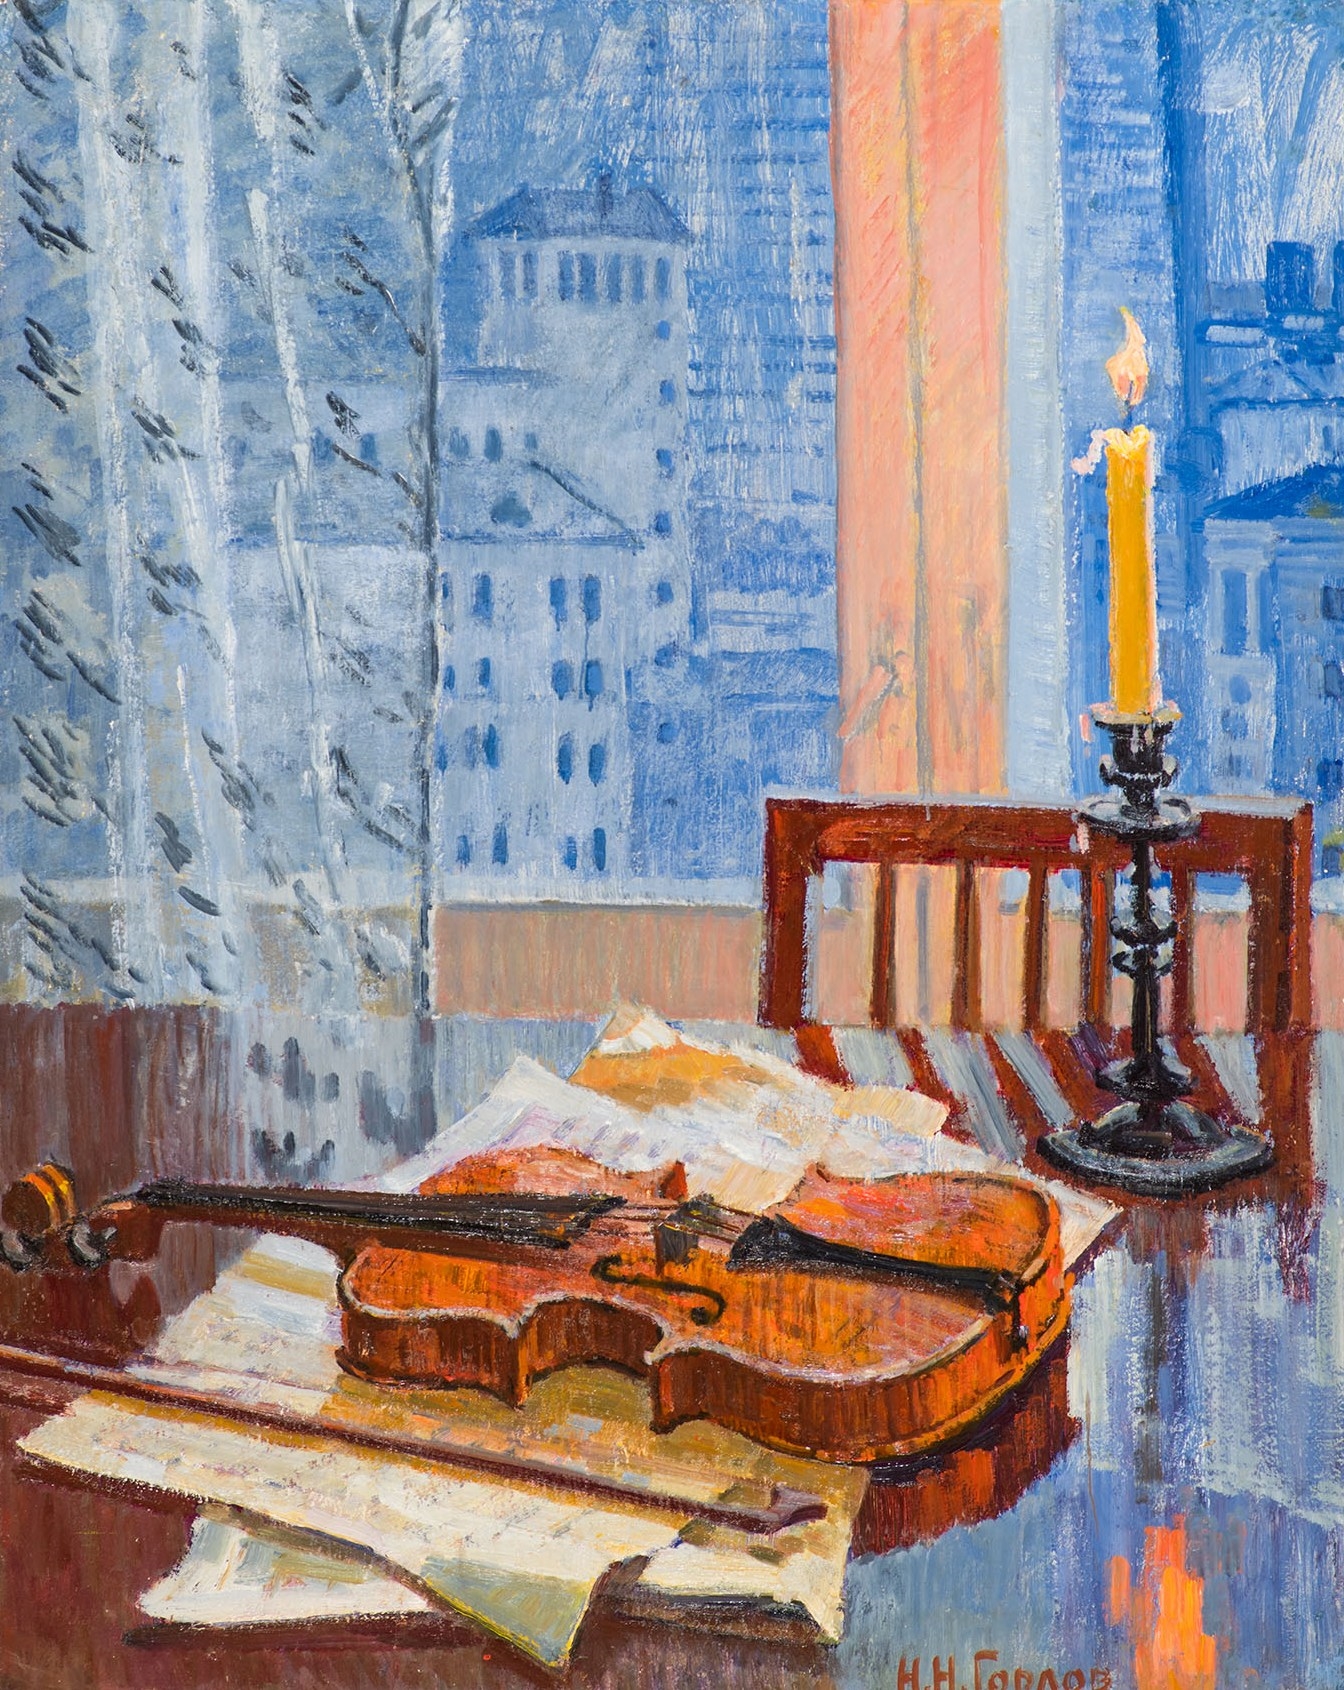 Artwork by Nicolaï Gorlov, Violin and candle, Made of Oil on cardboard